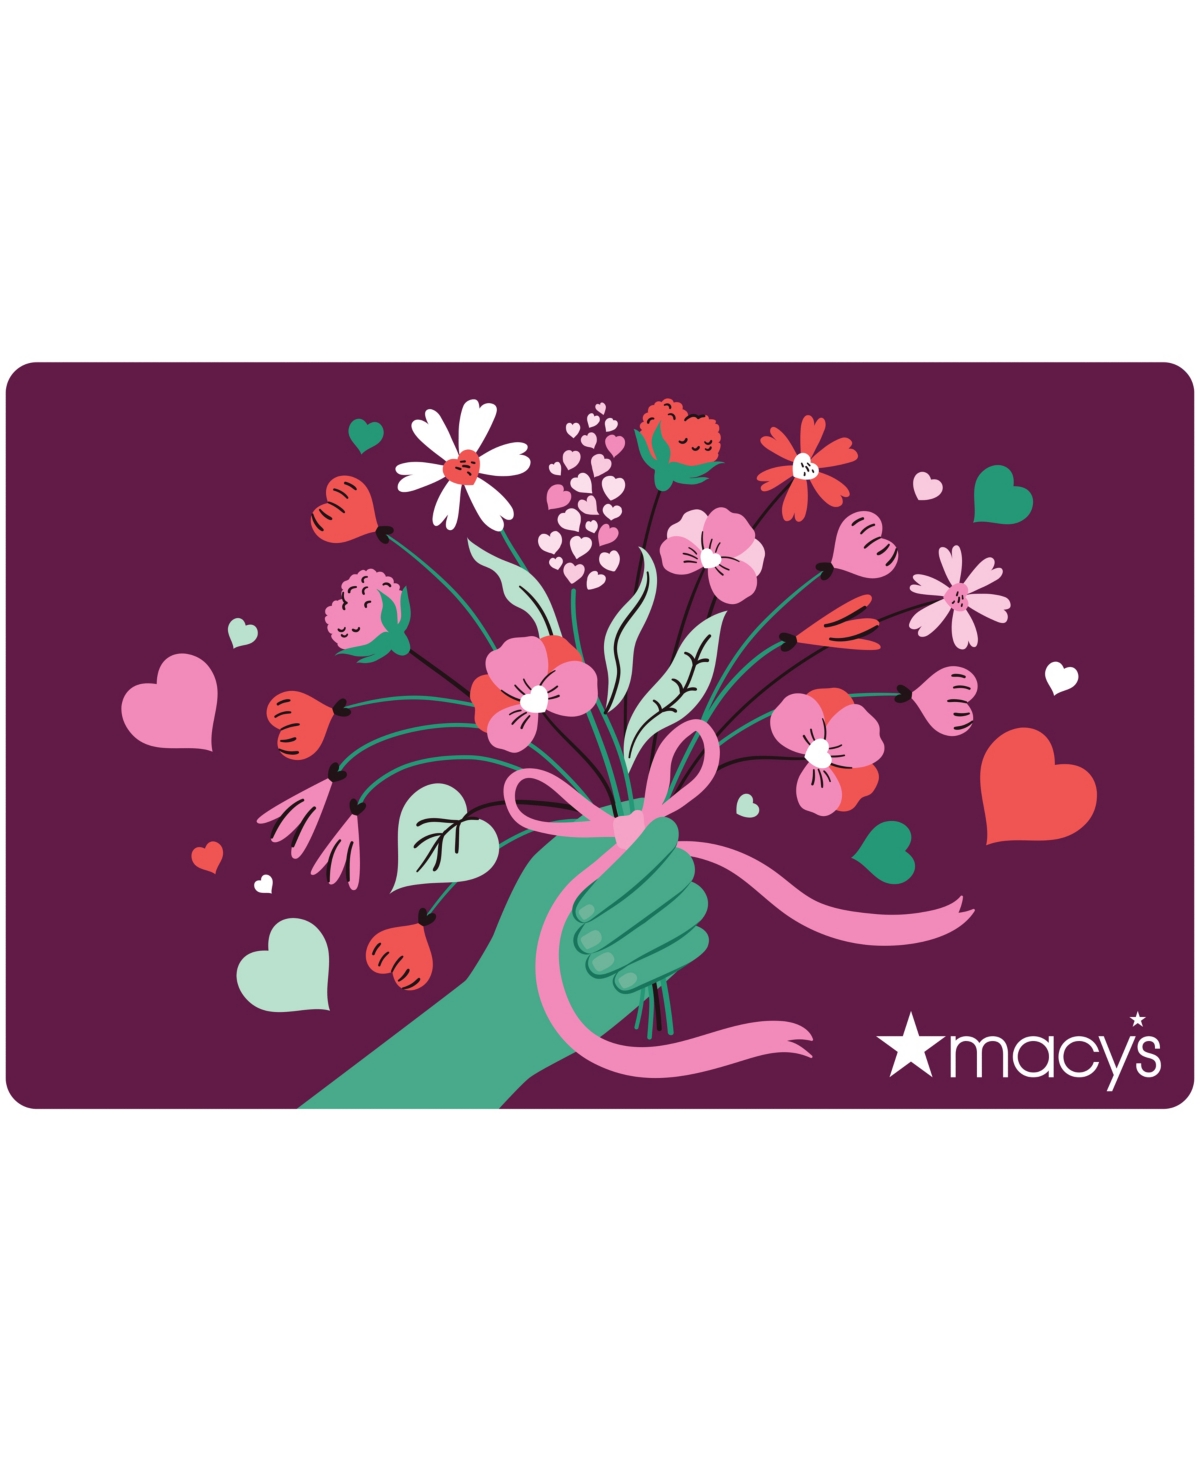 Where Love Blossoms E-Gift Card